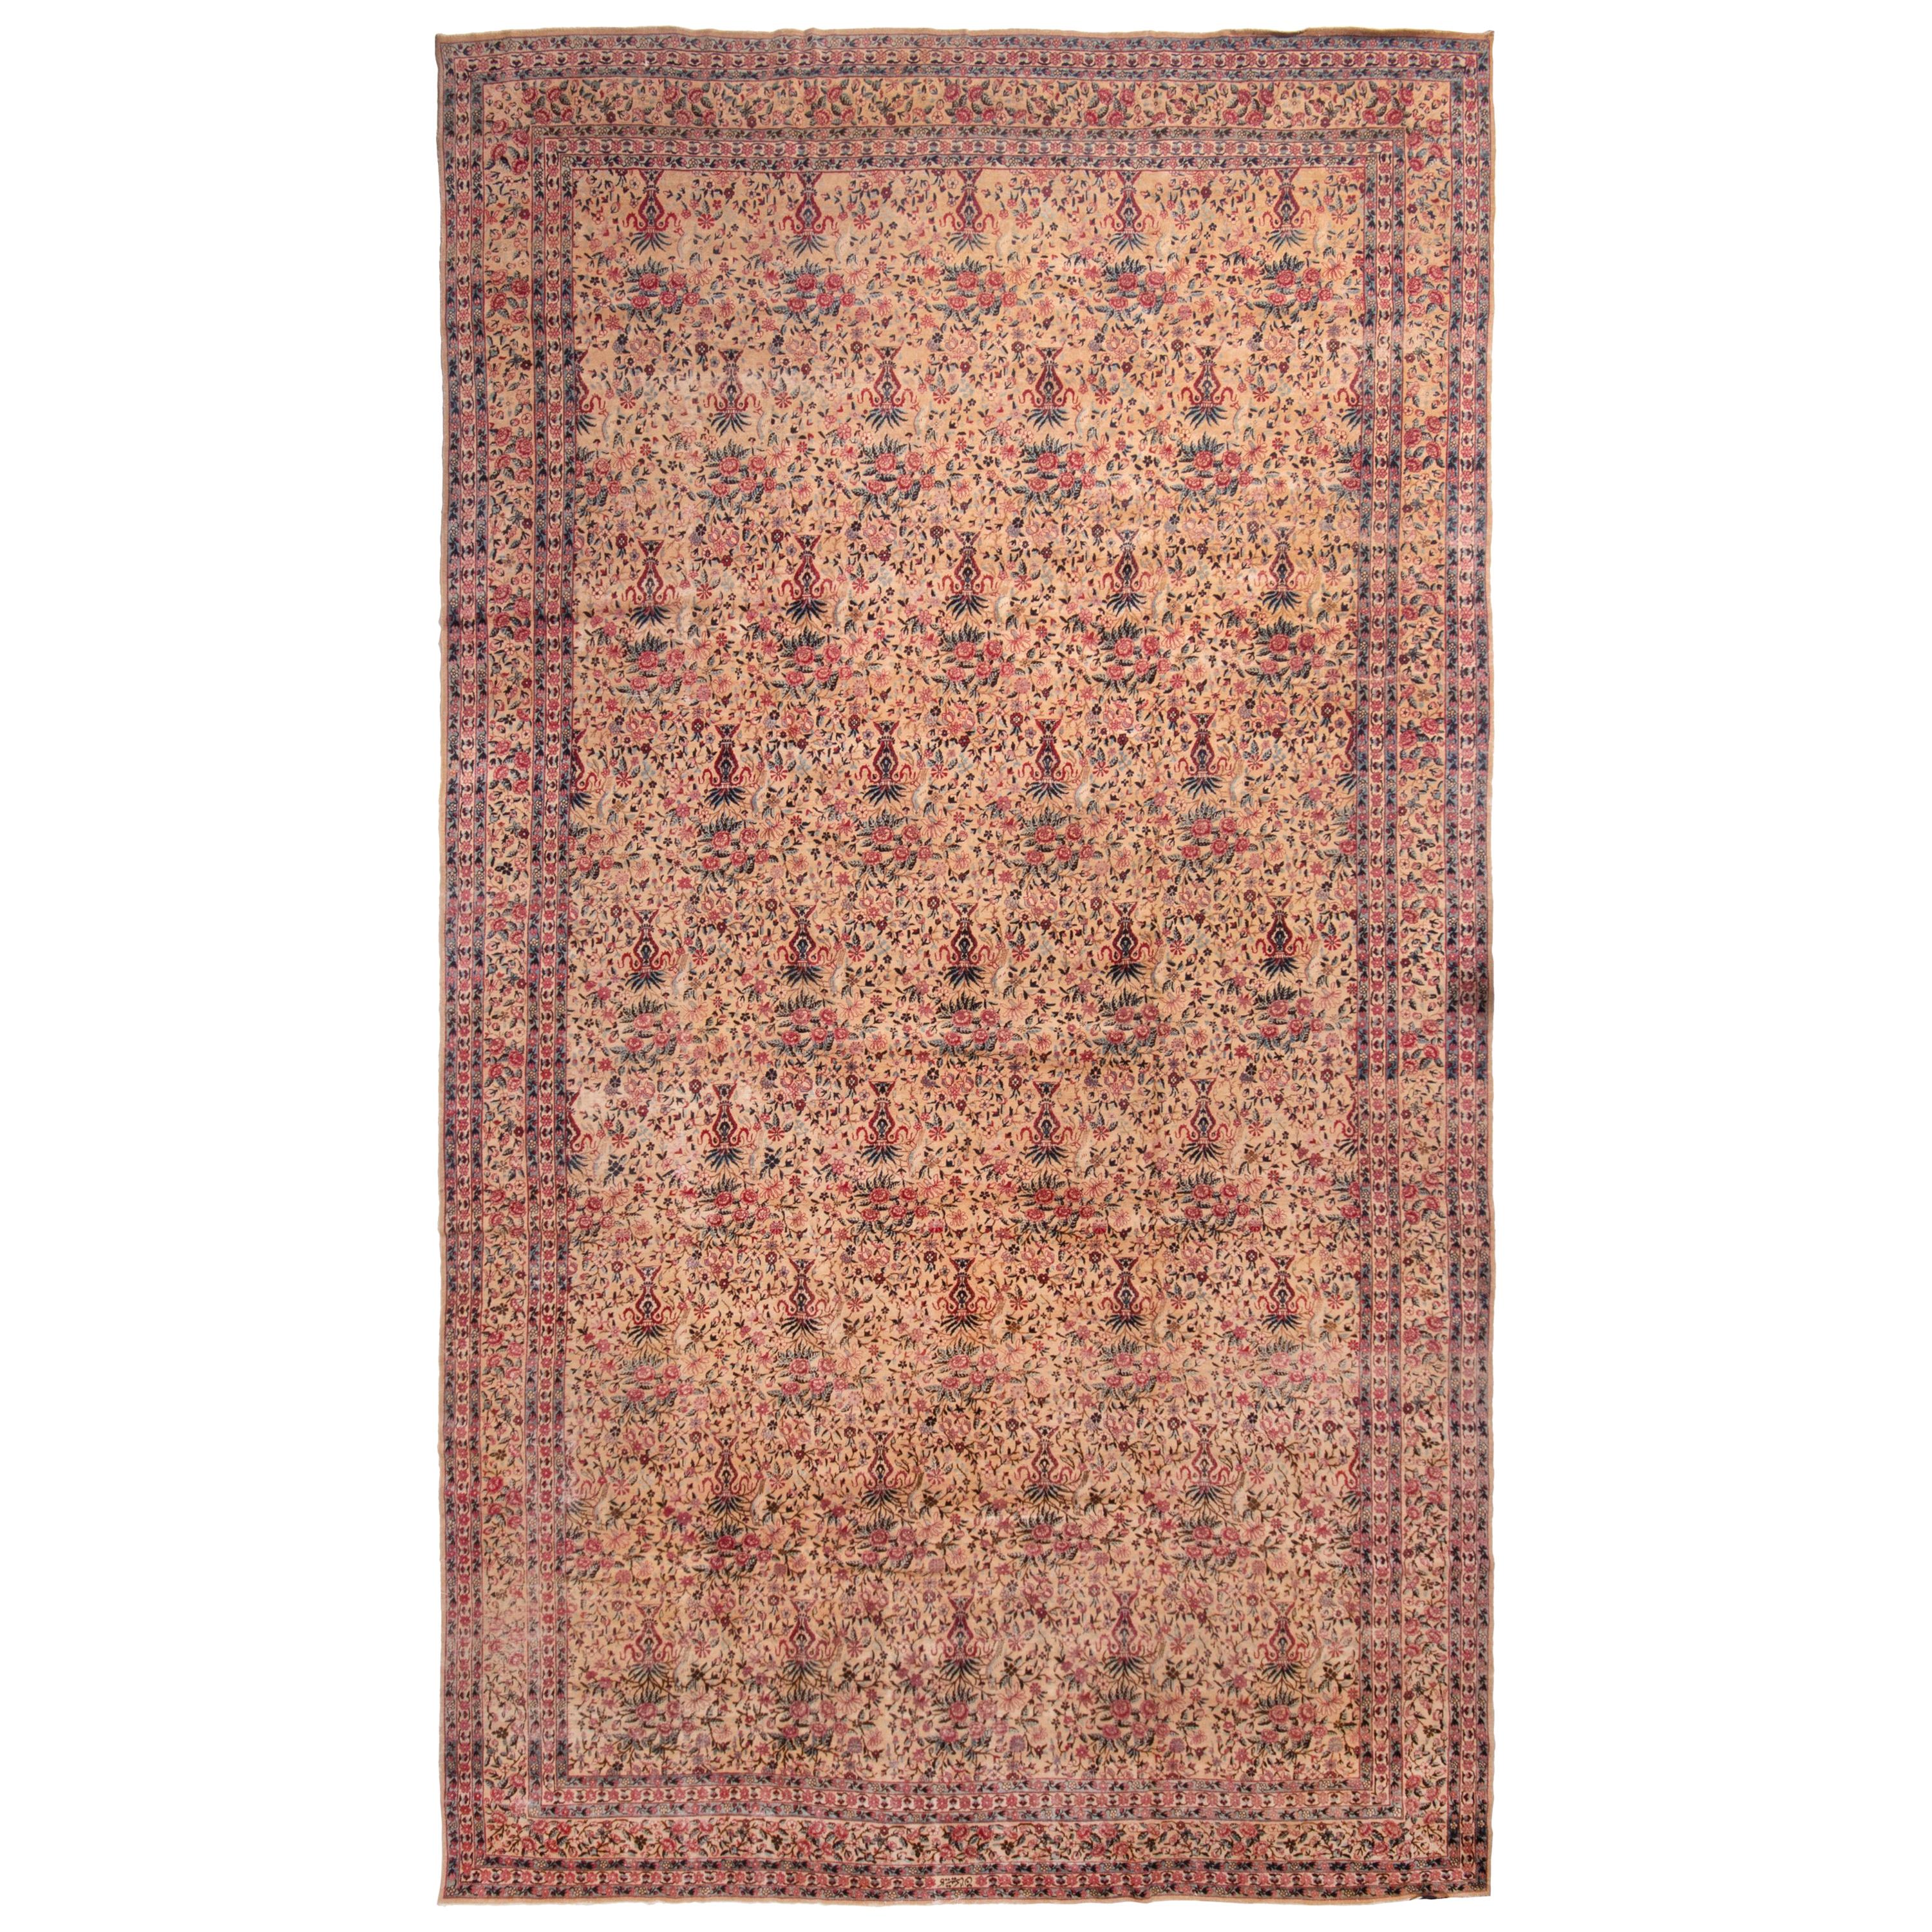 Antiquity Kerman Lavar Purple Red Wool Rug All-Over Floral Pattern (Tapis de laine violet et rouge)